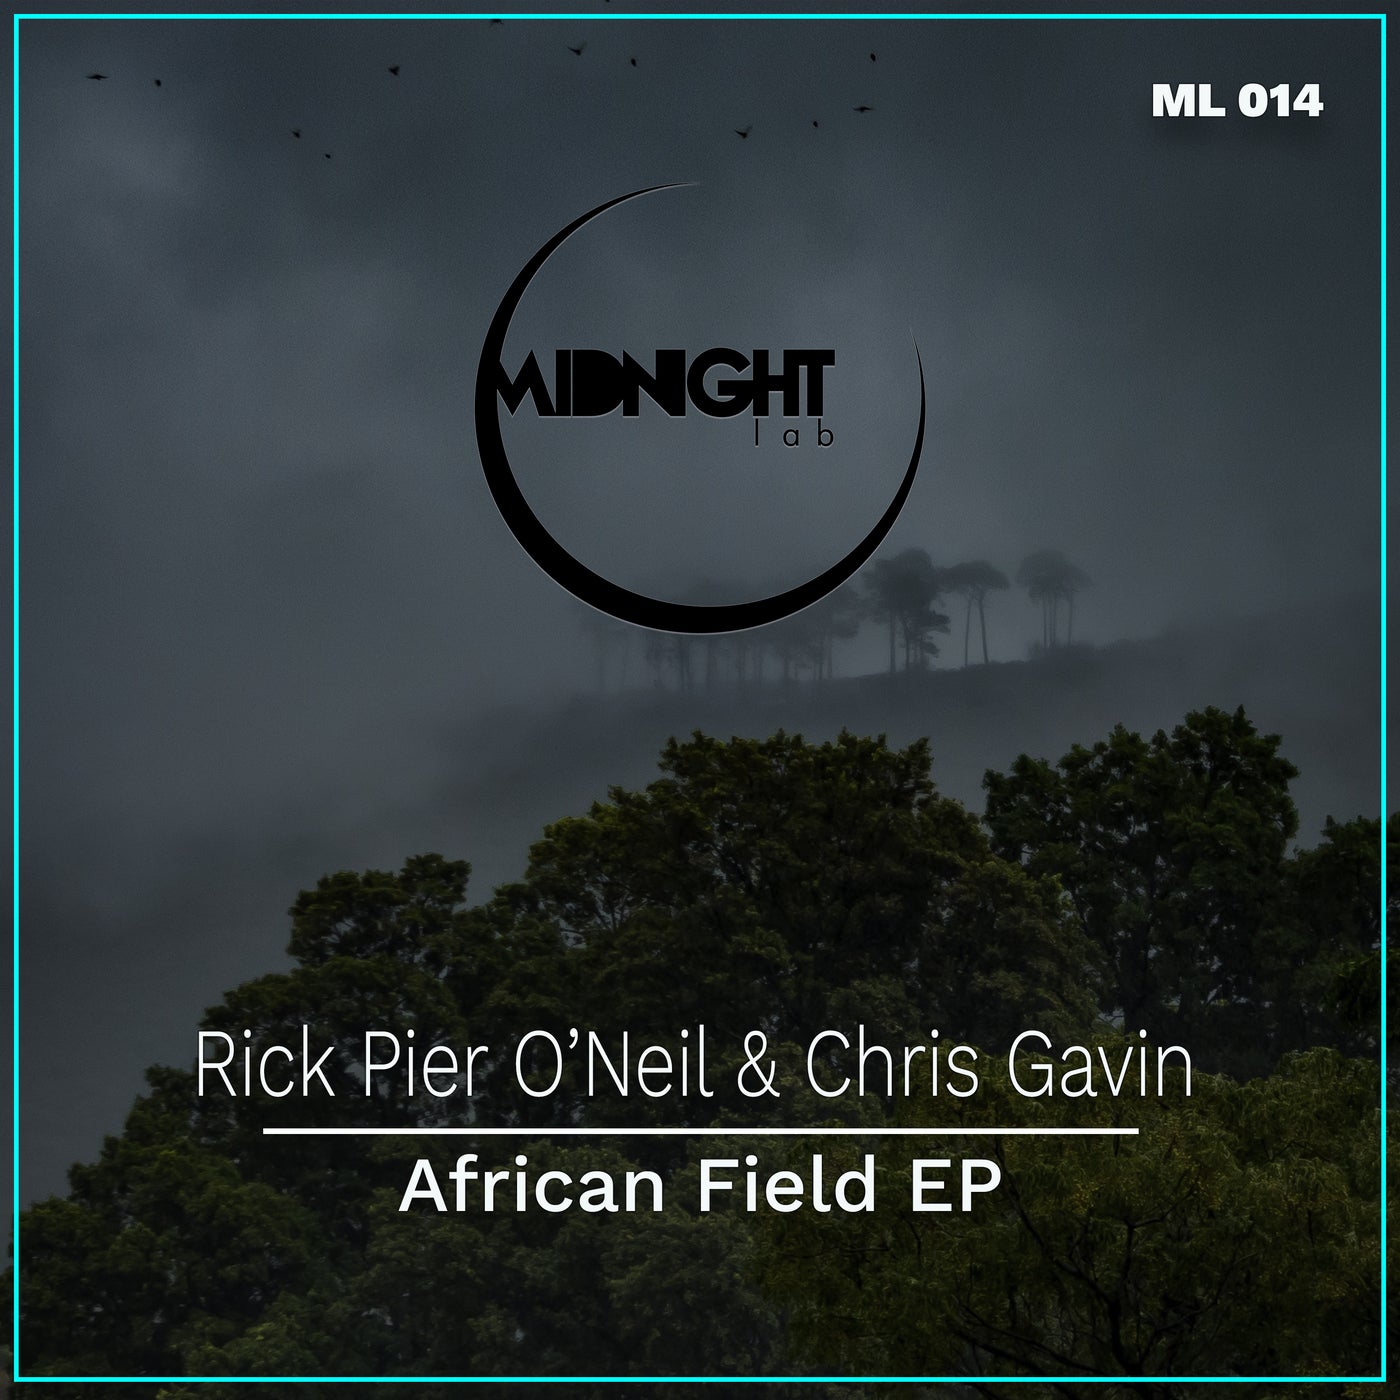 Rick Pier O'Neil, Chris Gavin - African Field EP [ML014]